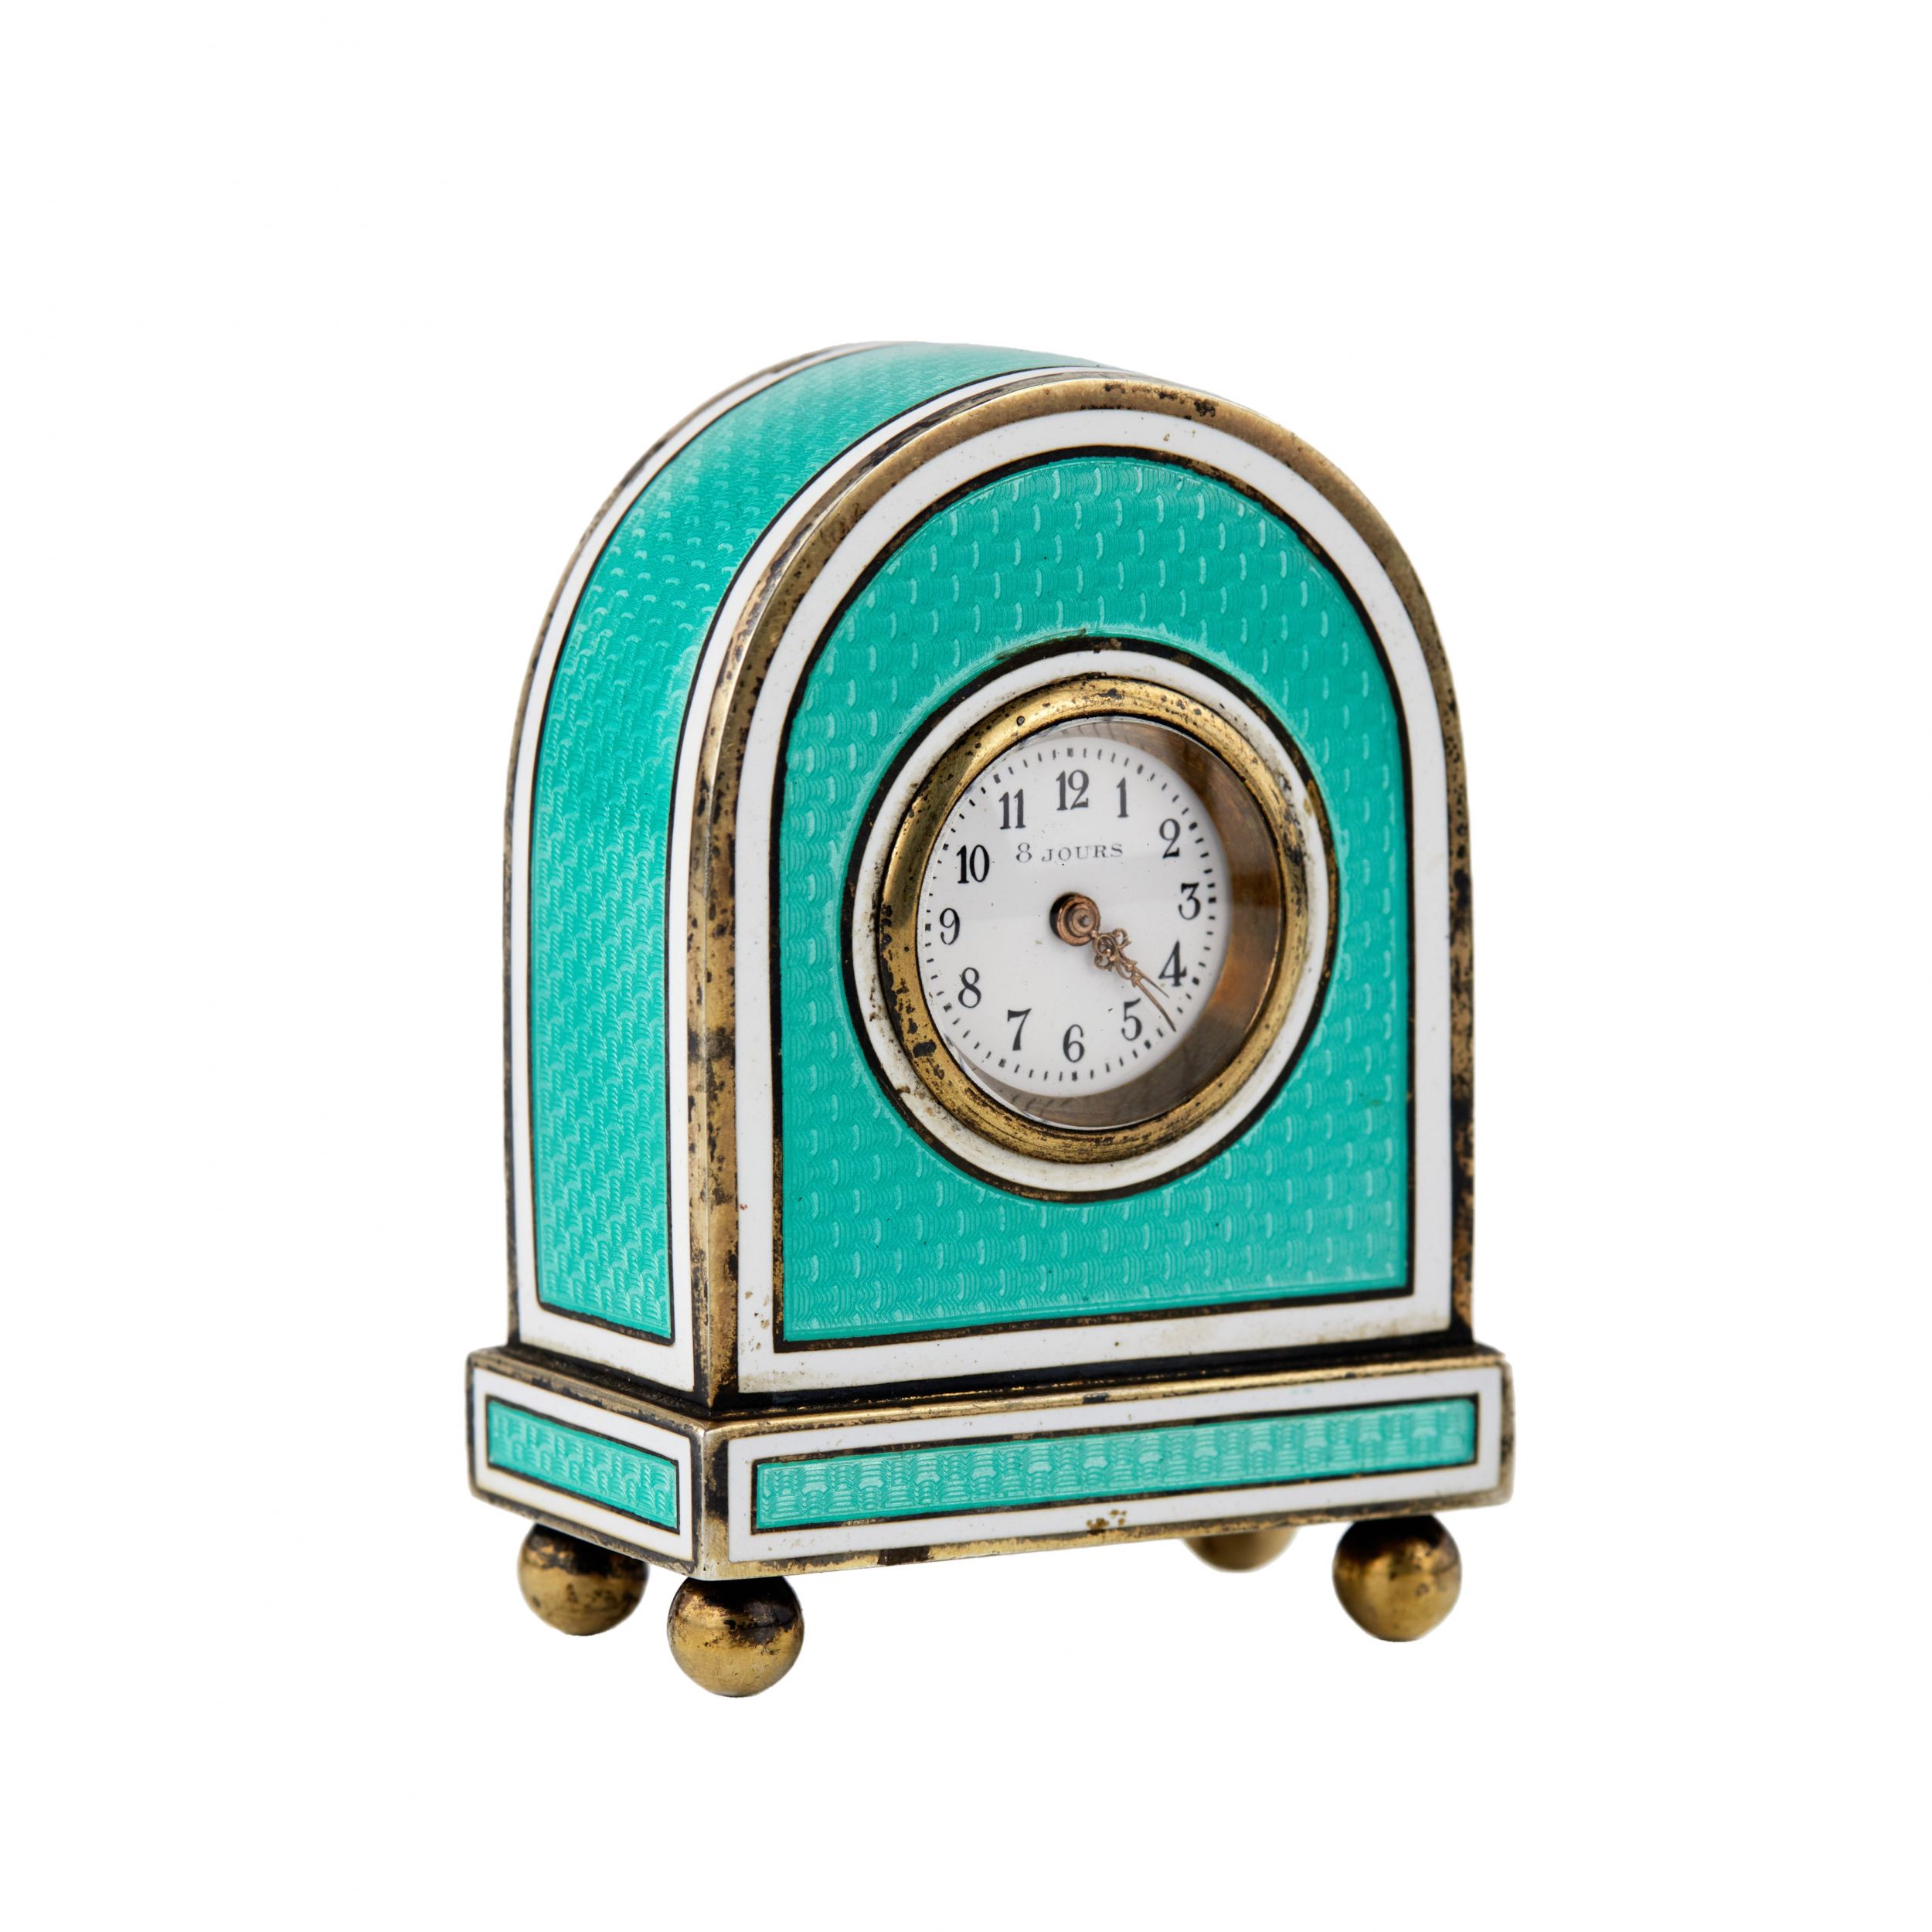 Miniature-travel-clock-in-guilloche-enamel-on-silver-in-its-own-case